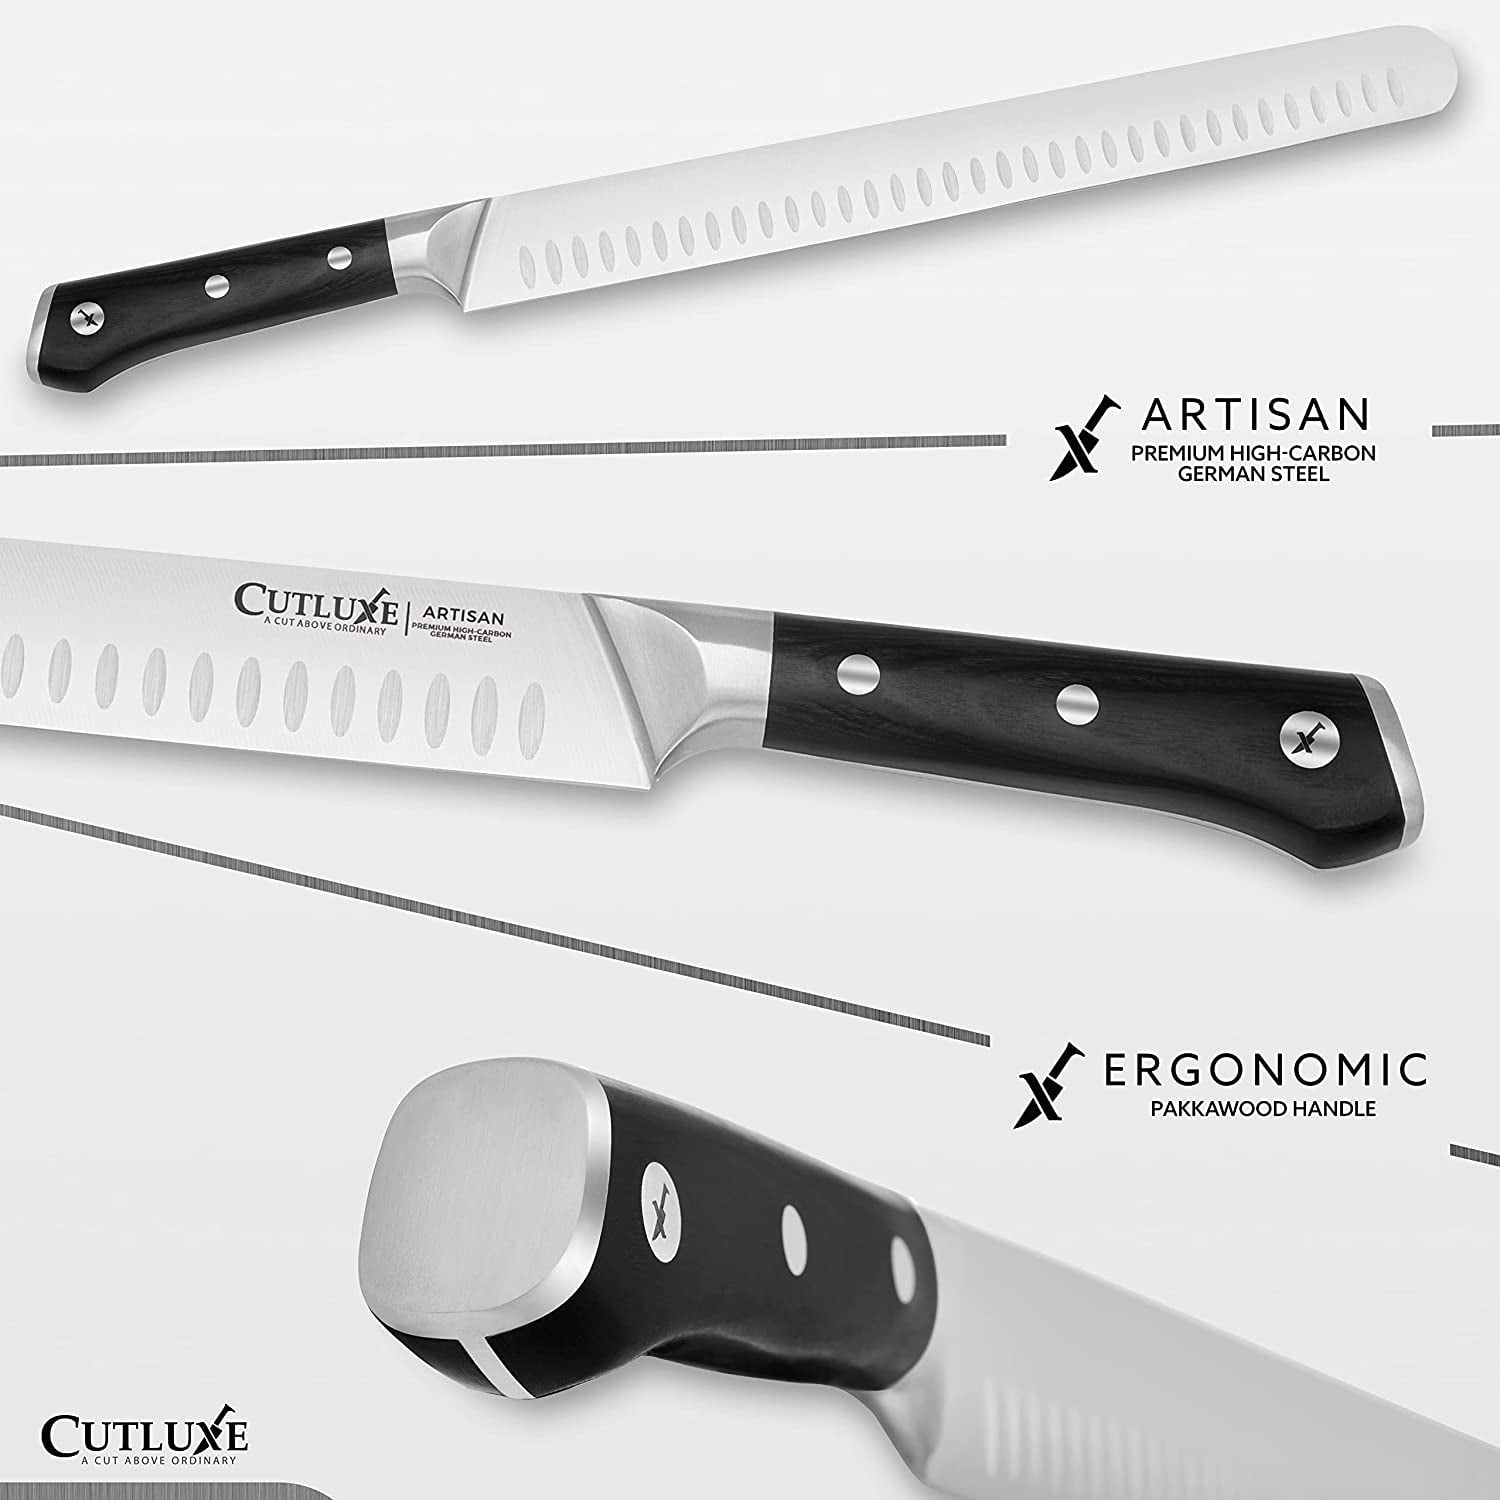 Damask brisket knife, 26cm, adelmayer®, 1 piece, wooden box